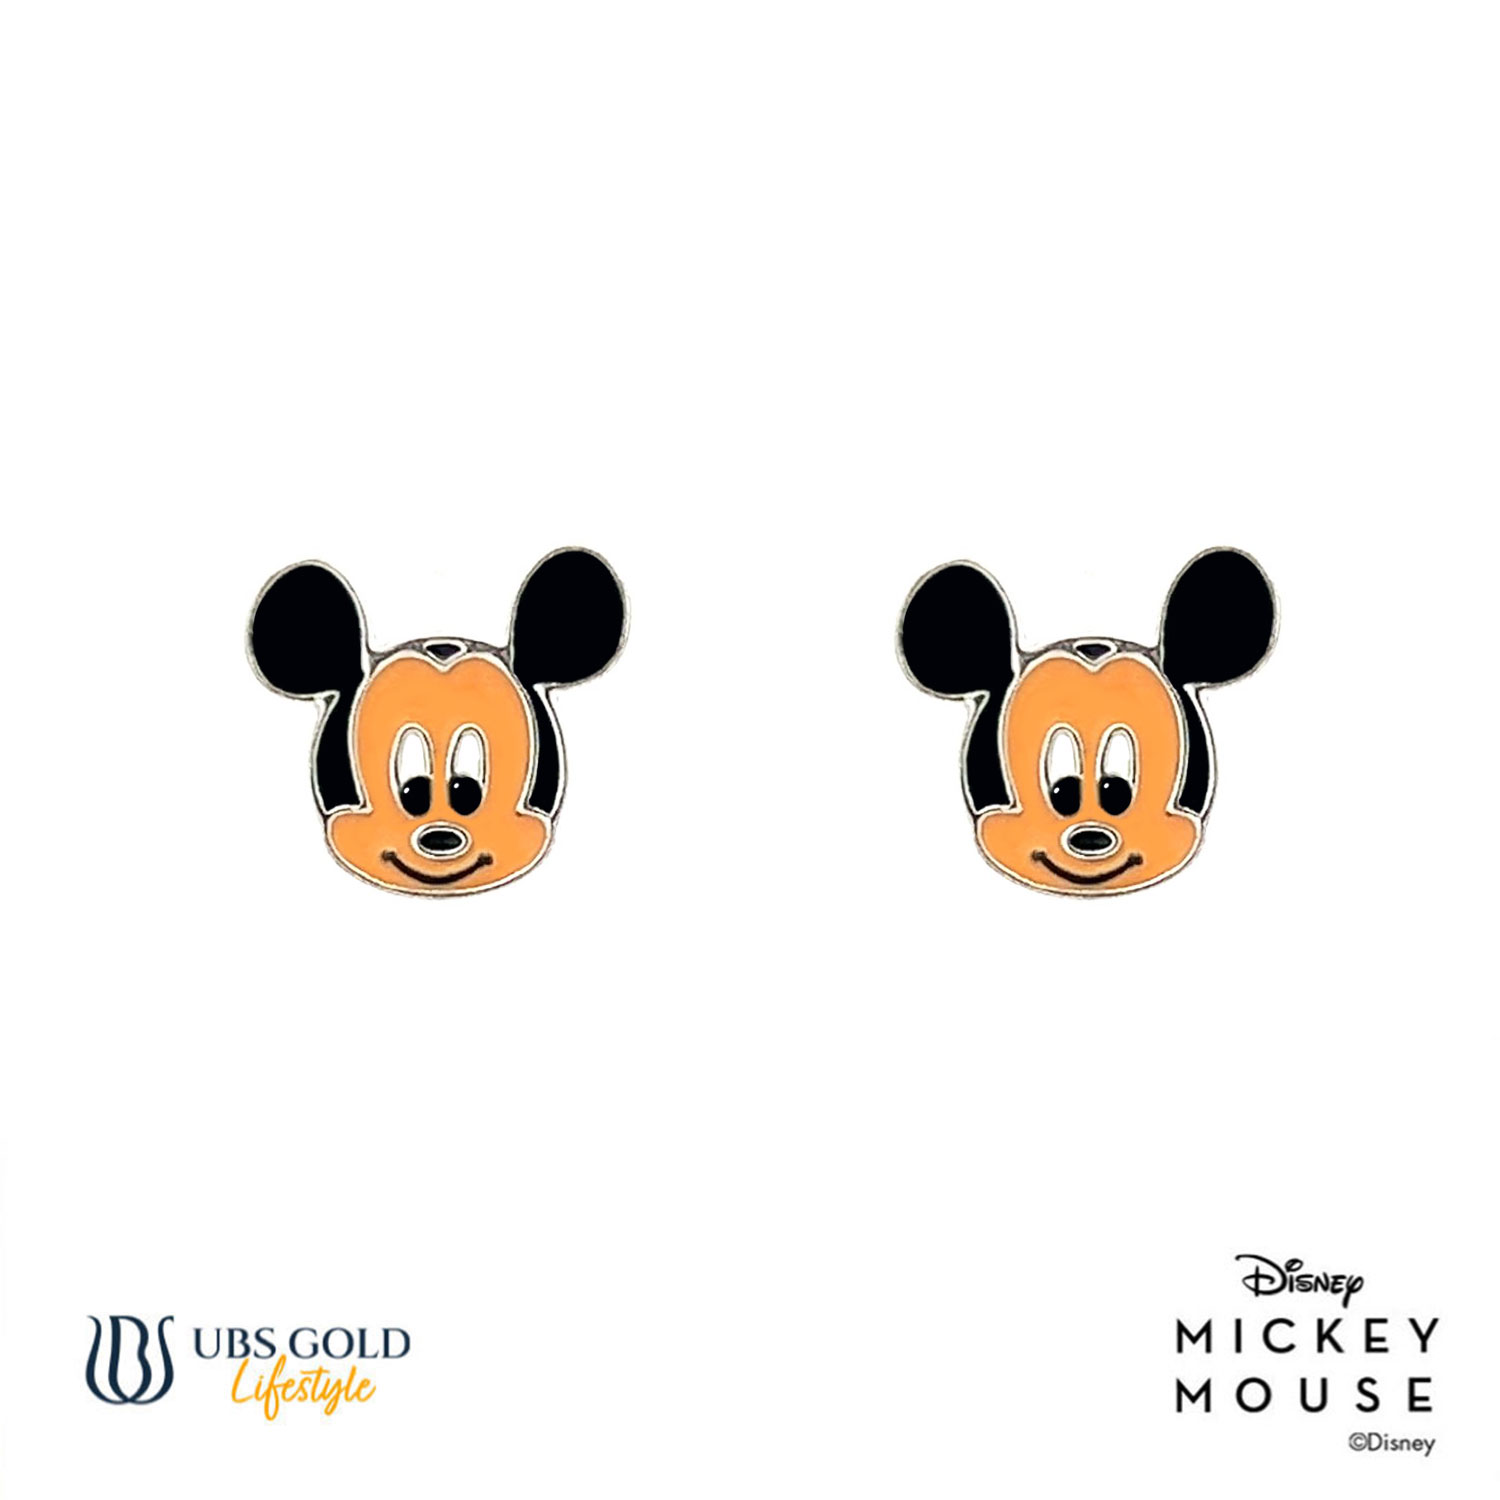 UBS Anting Emas Anak Disney Mickey Mouse - Awy0015T - 17K